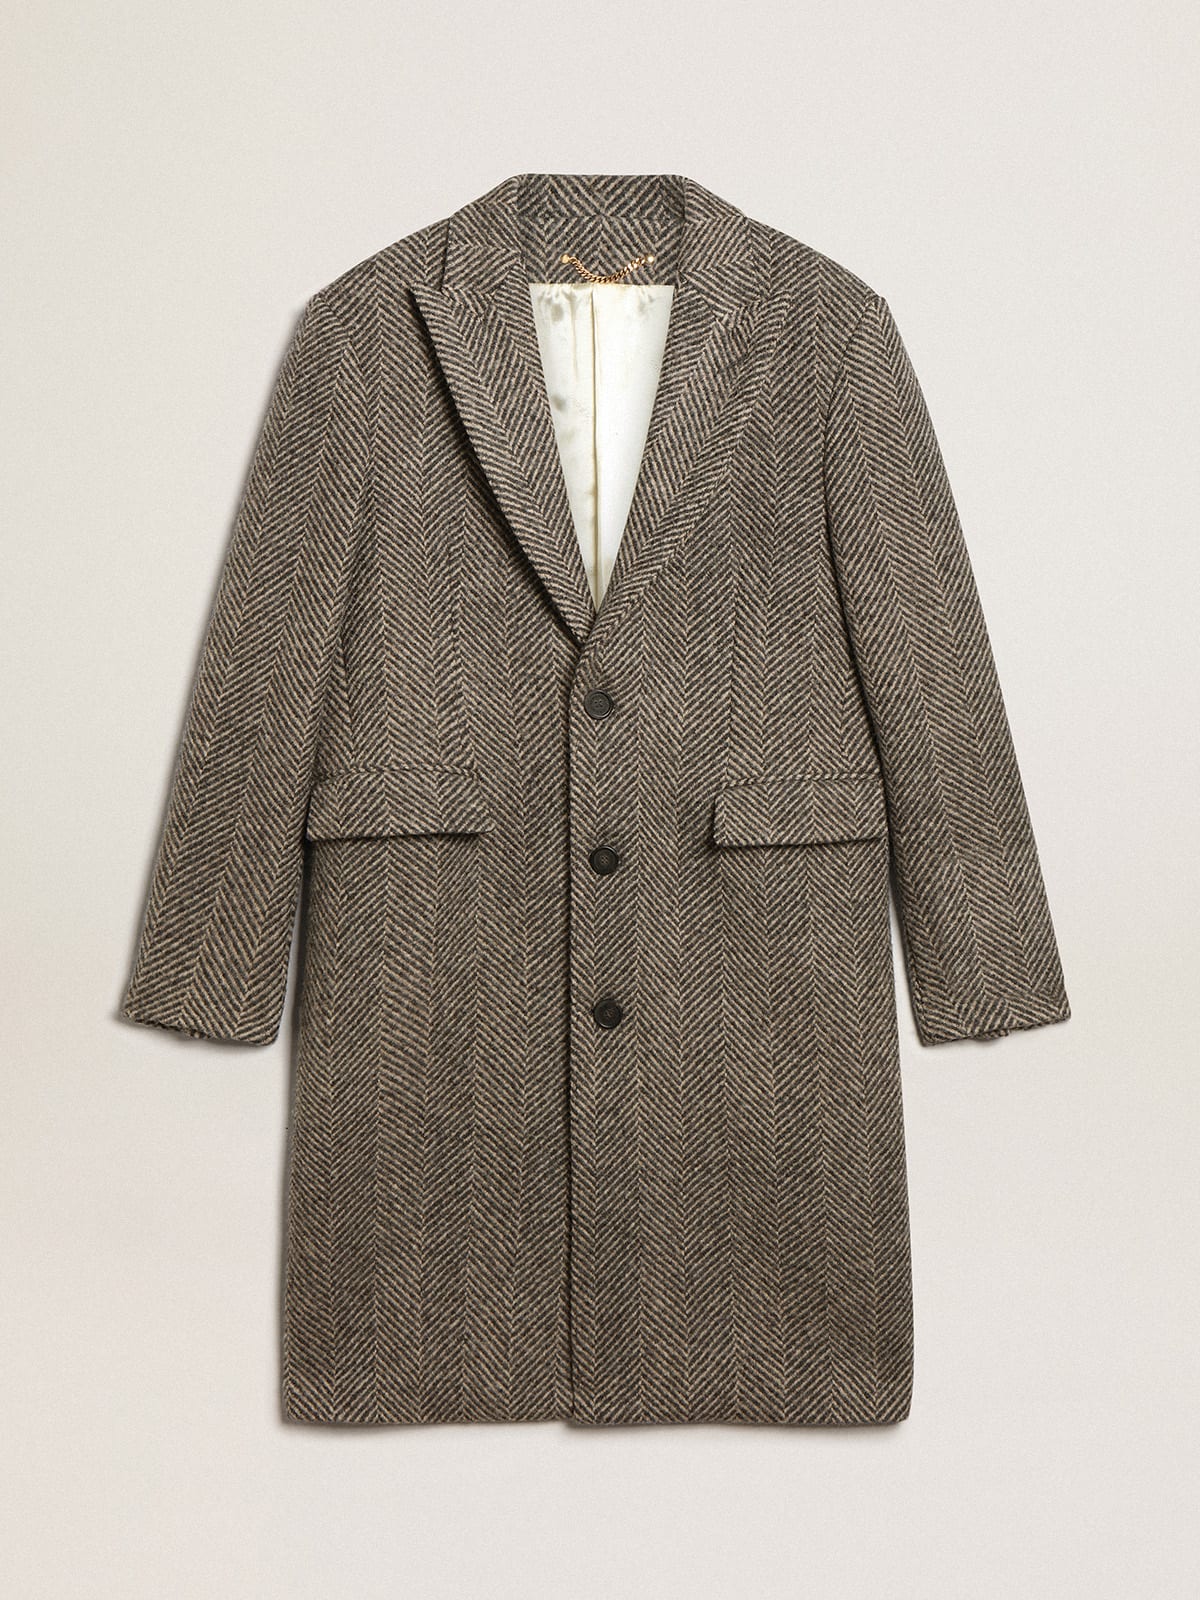 Golden Goose - Men's single-breasted wool coat with beige and gray herringbone weave in 